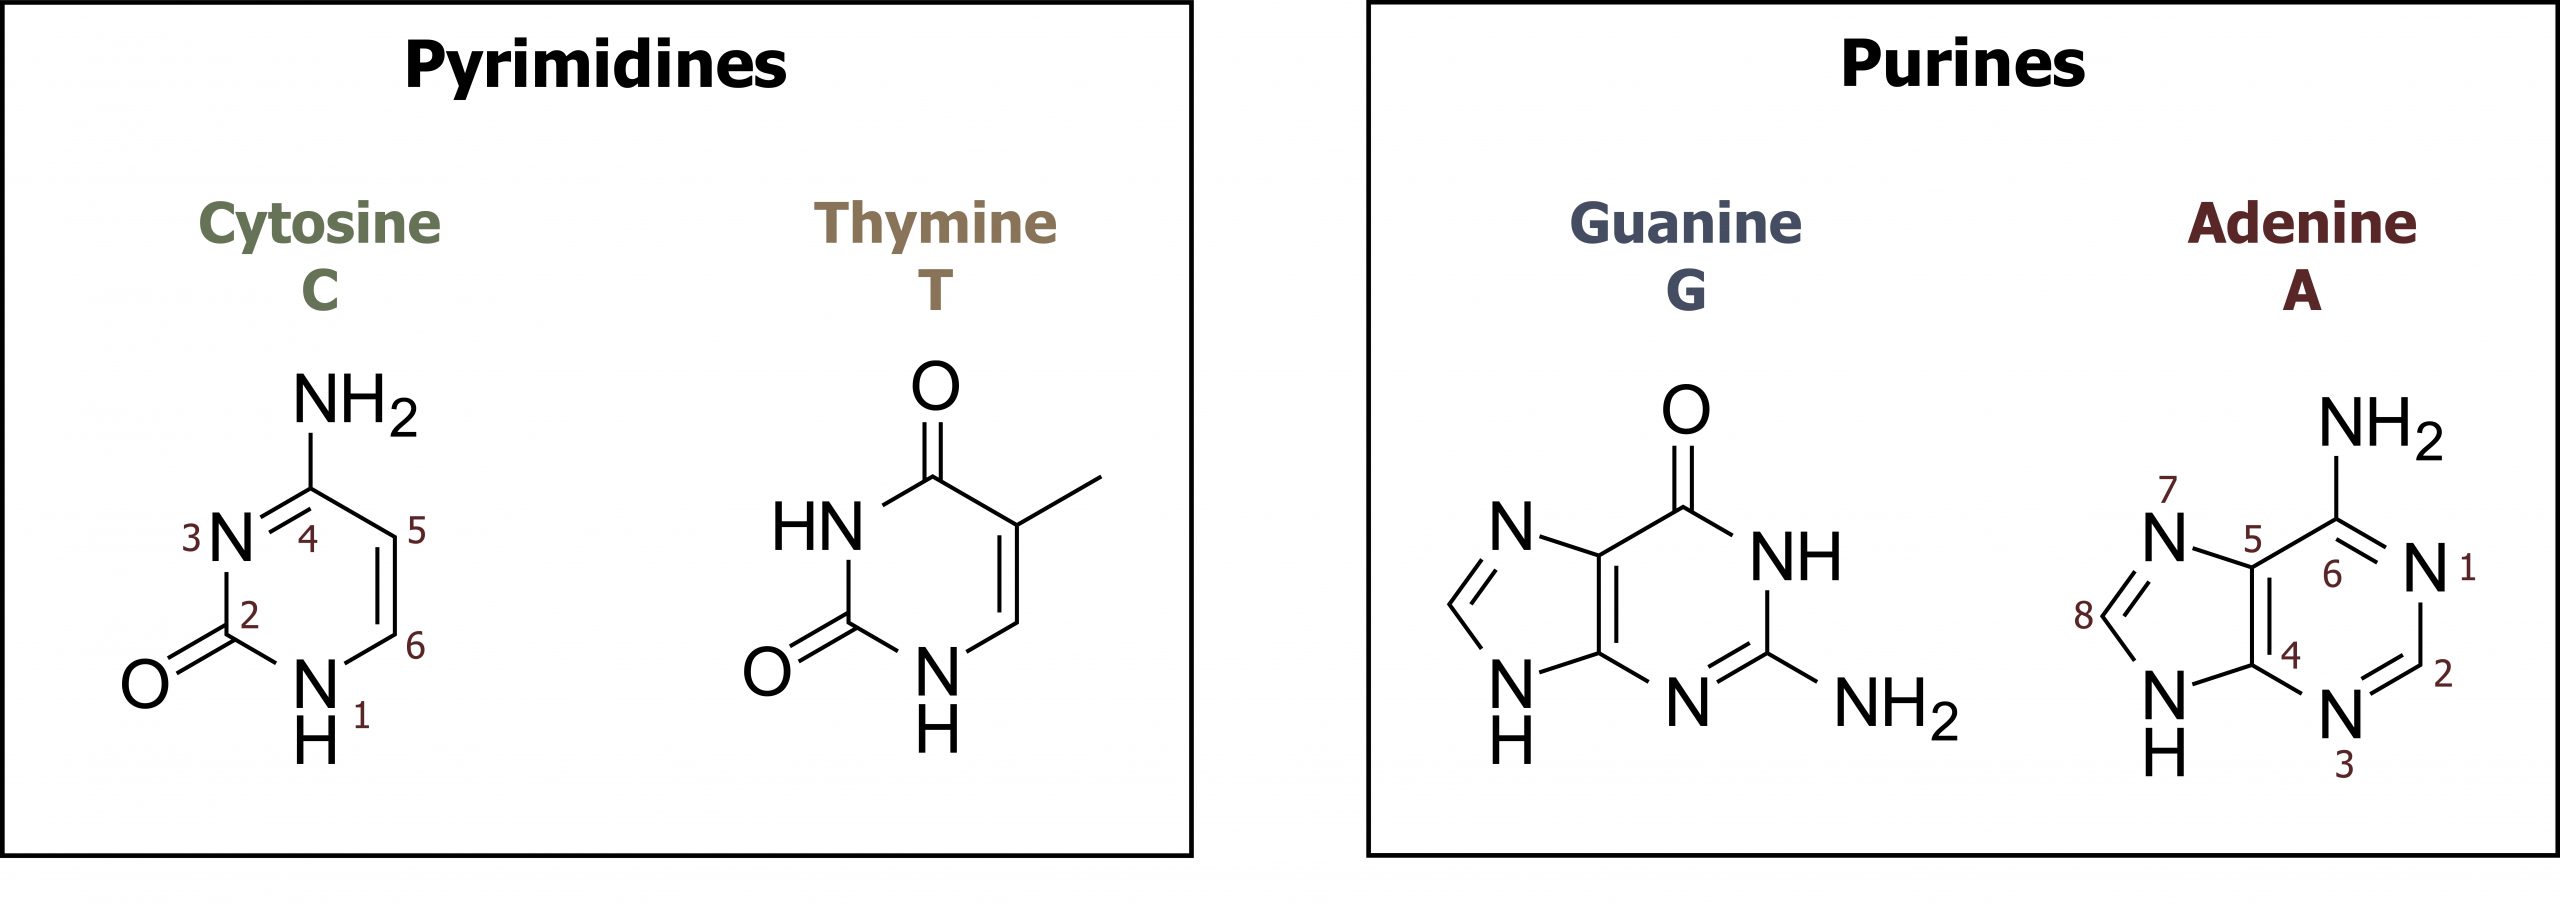 Cytosine IUPAC ID: 6-amino-1H-pyrimidin-2-one. Thymine IUPAC ID: 5-methyl-1H-pyrimidine-2,4-dione. Guanine IUPAC ID: 2-amino-1,7-dihydropurin-6-one. Adenine IUPAC ID: 7H-purin-6-amine.